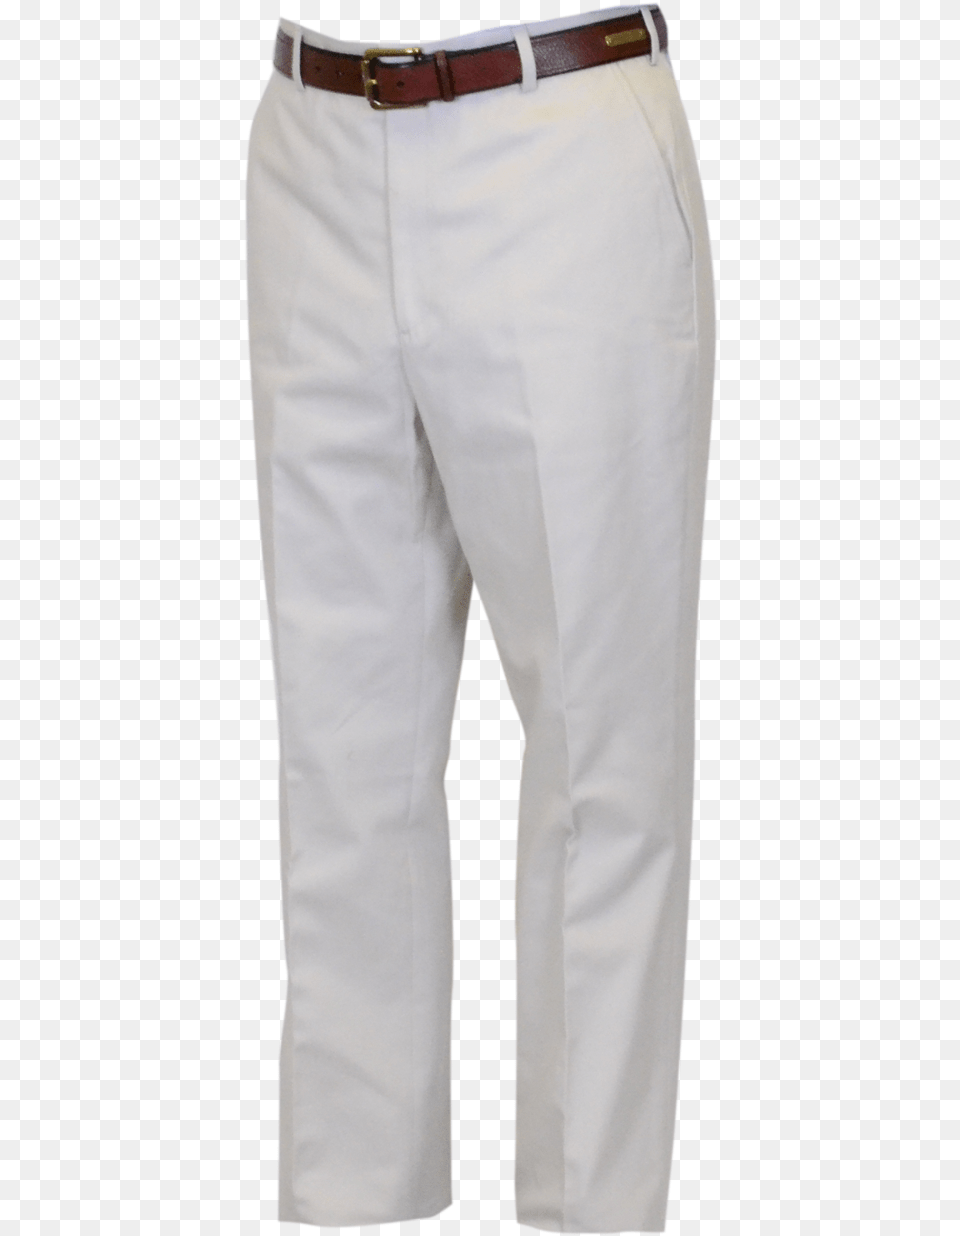 Trousers Transparent Picture Formal Pant Transparent, Clothing, Pants, Home Decor, Linen Png Image